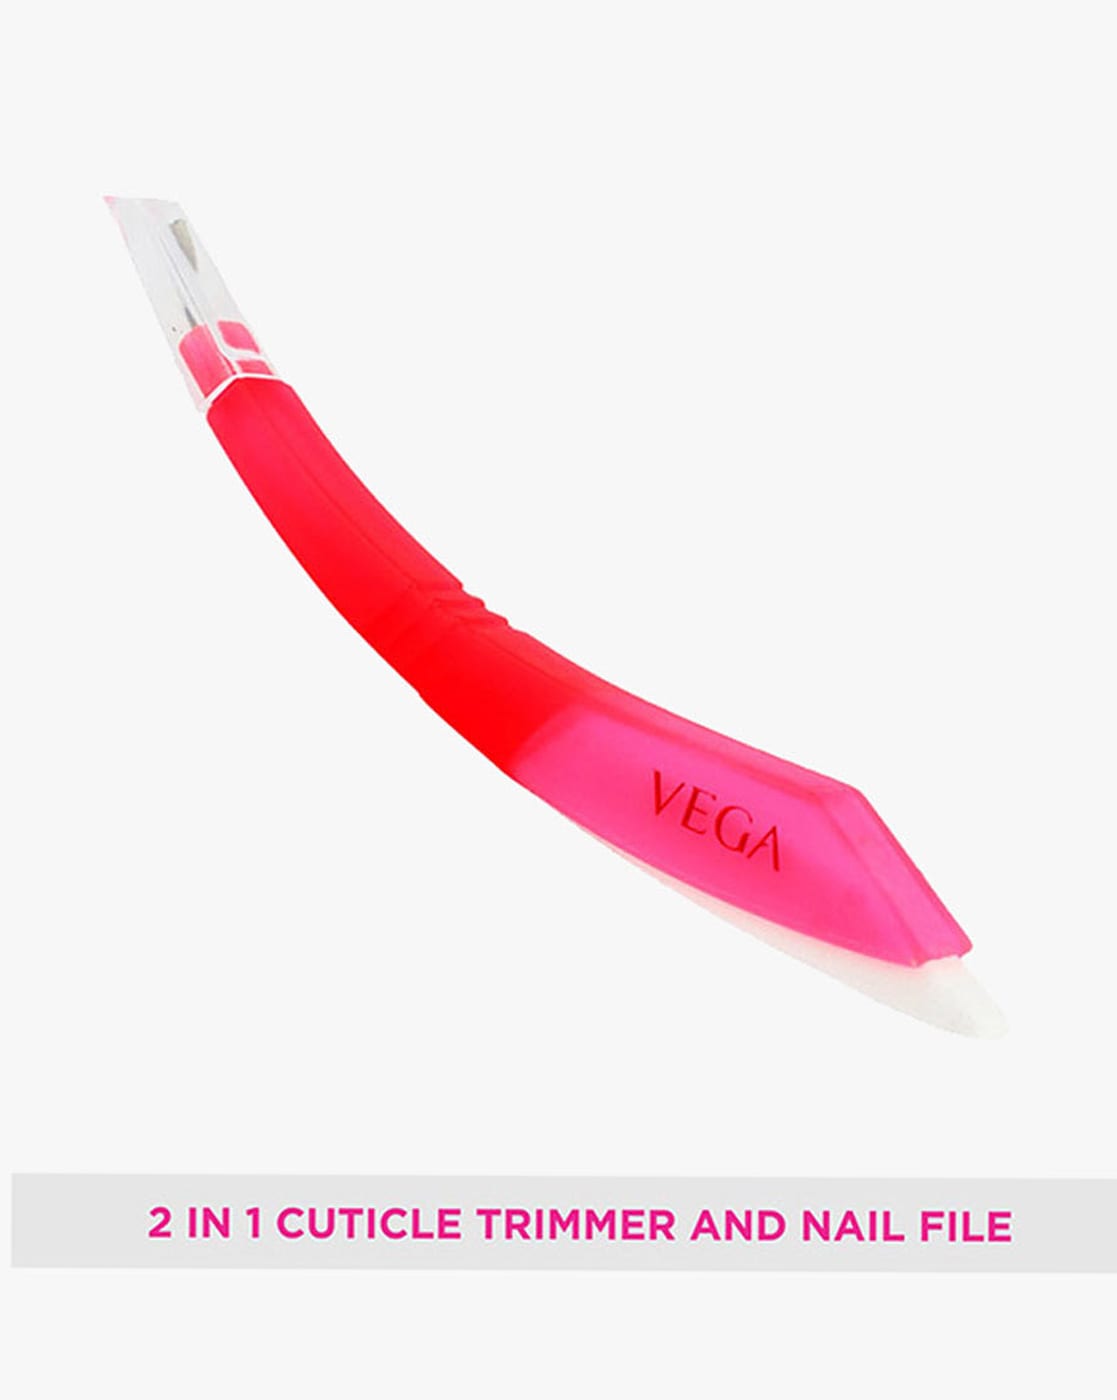 Vega Nail Buffer & VEGA Portable & Foldable Nail File for Qaulity Manicure  : Amazon.in: Beauty